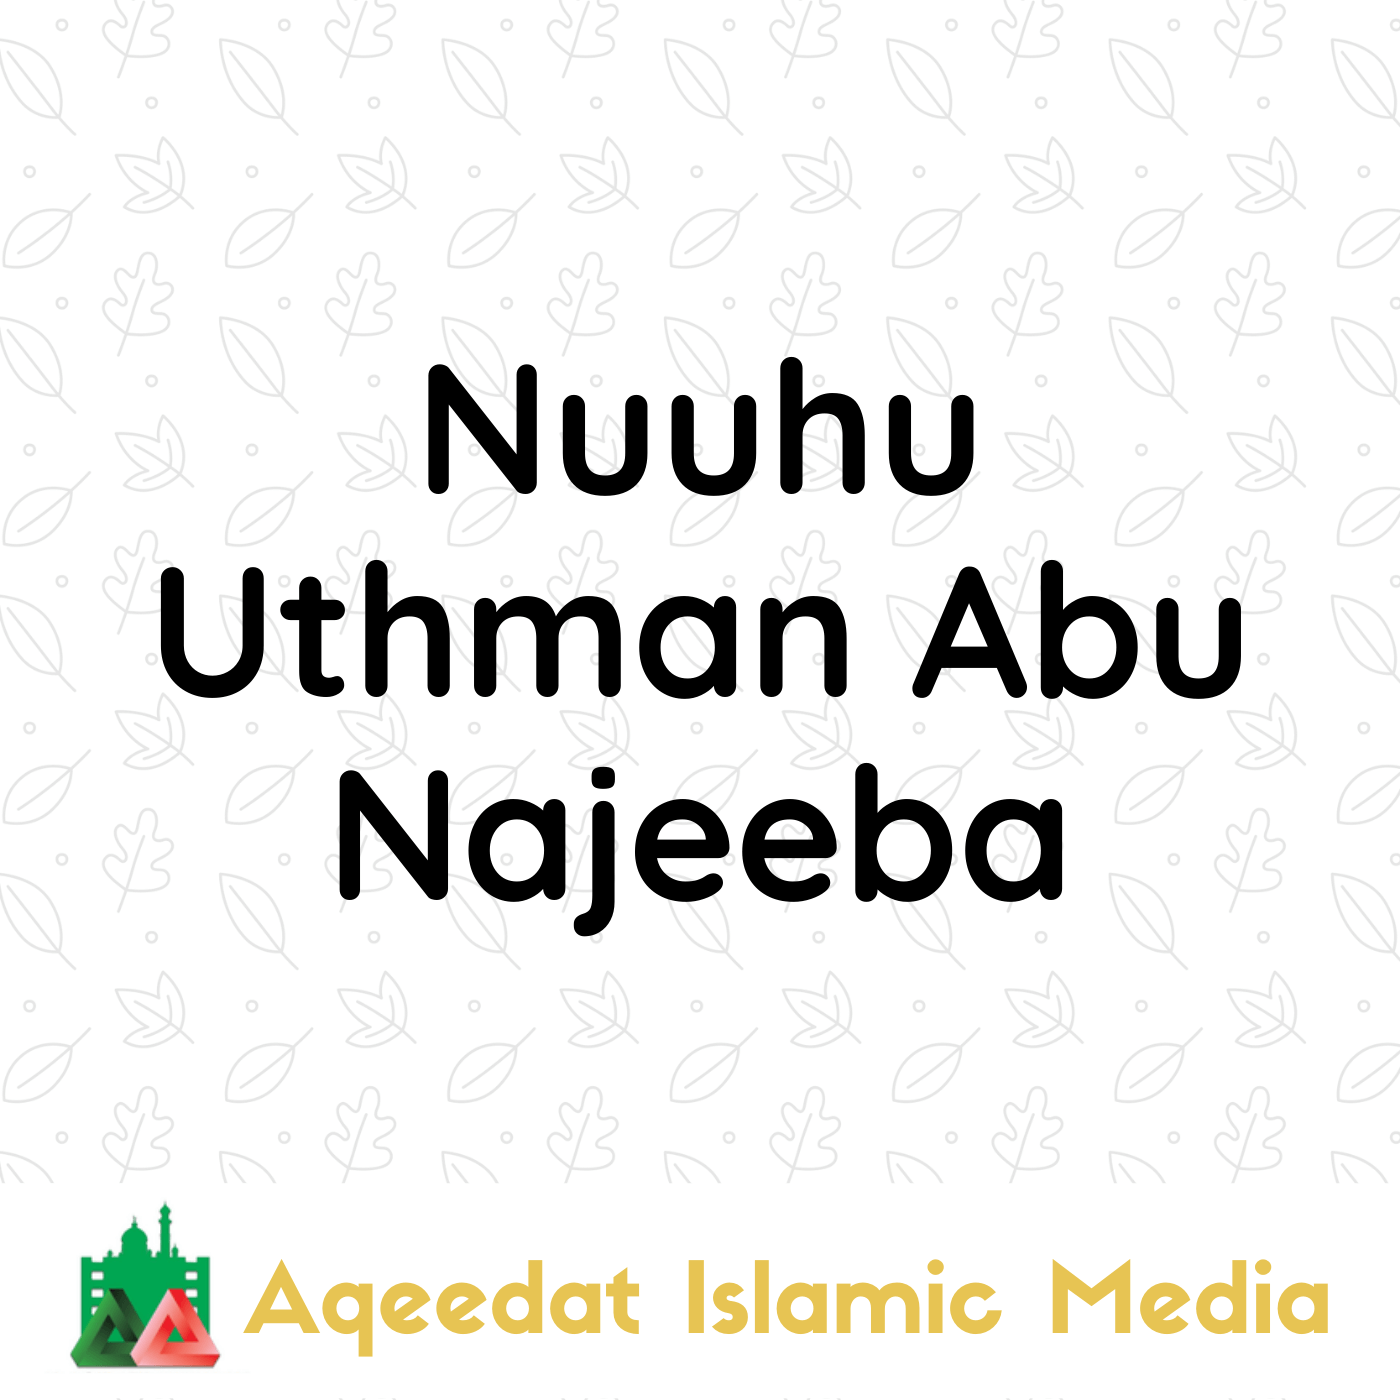  Nuuhu Uthman Abu Najeeba